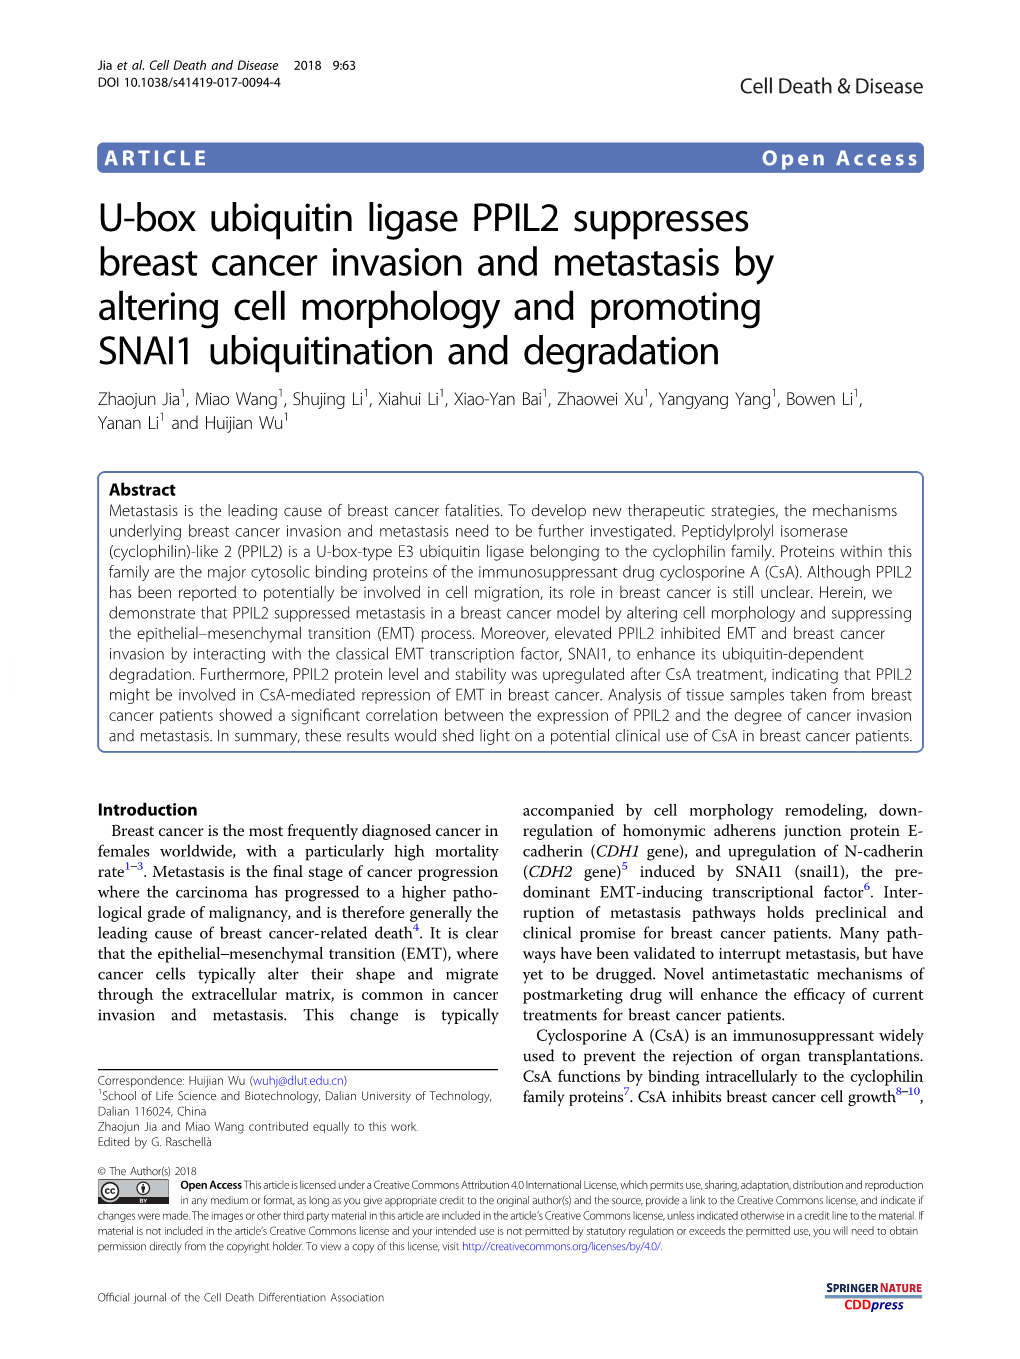 U-Box Ubiquitin Ligase PPIL2 Suppresses Breast Cancer Invasion